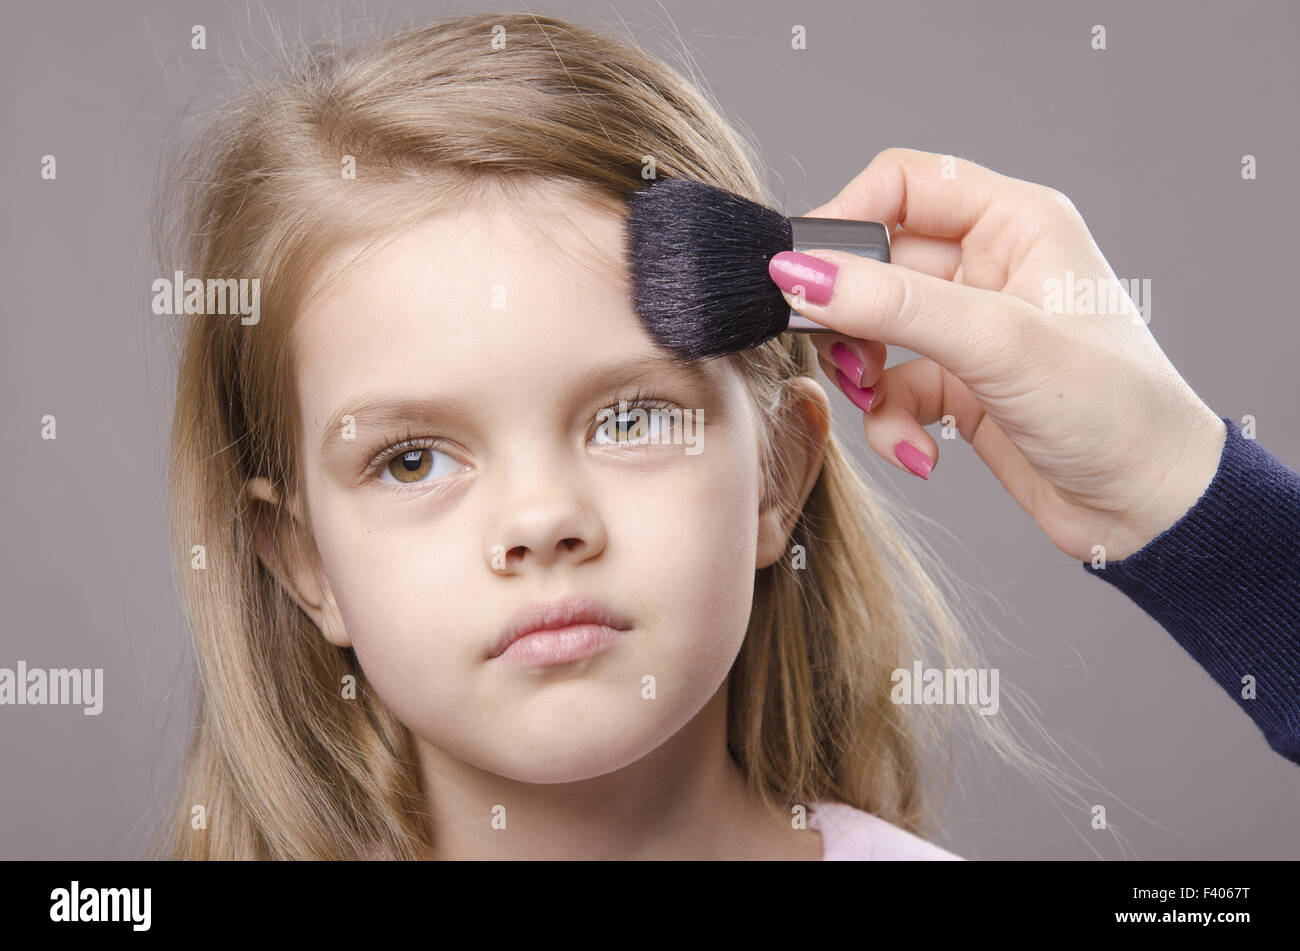 Makeup artist deals powder on face of girl Stock Photo